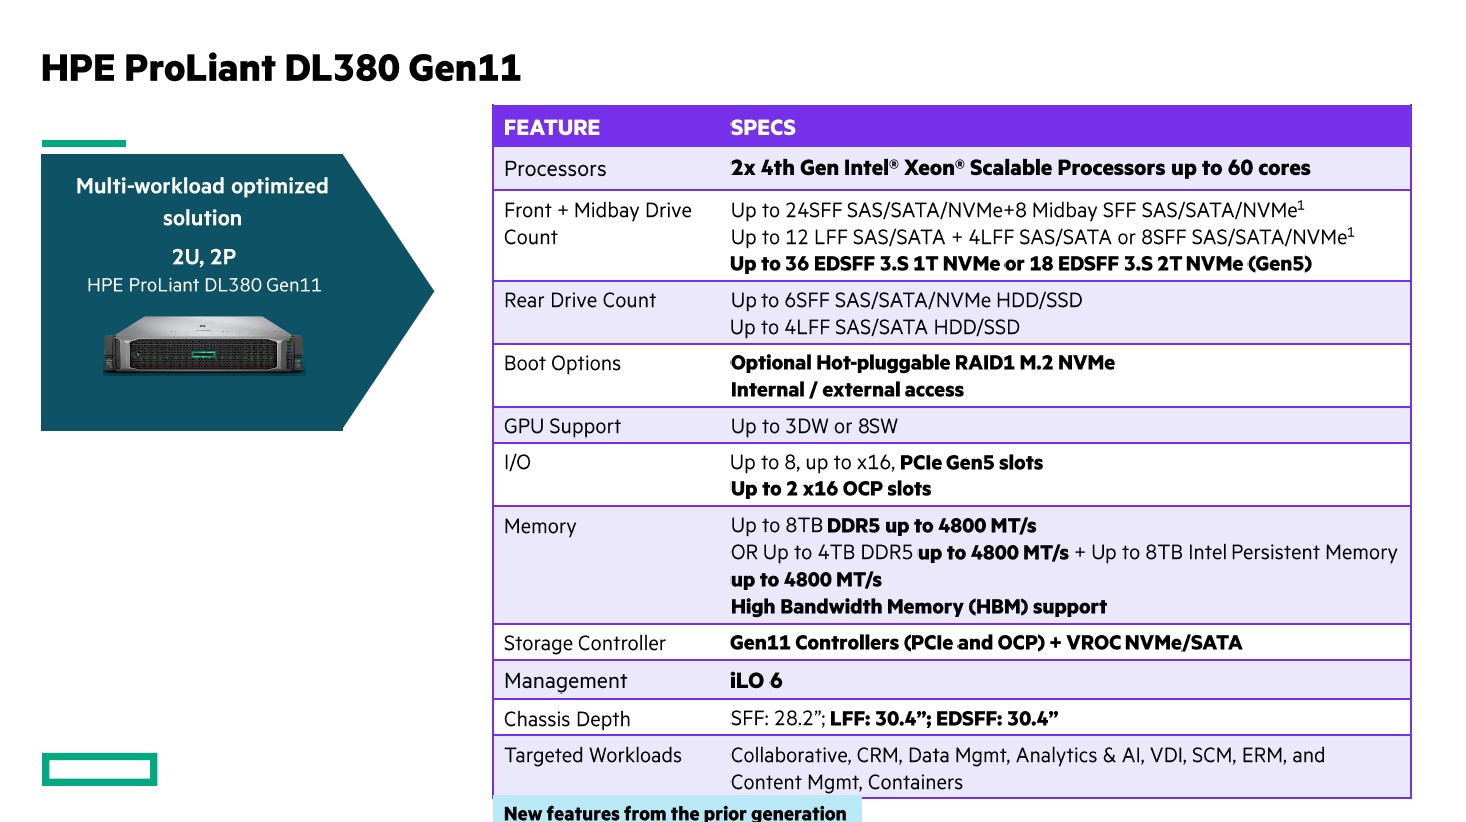 HPE ProLiant DL320 Gen11 1U For SPR